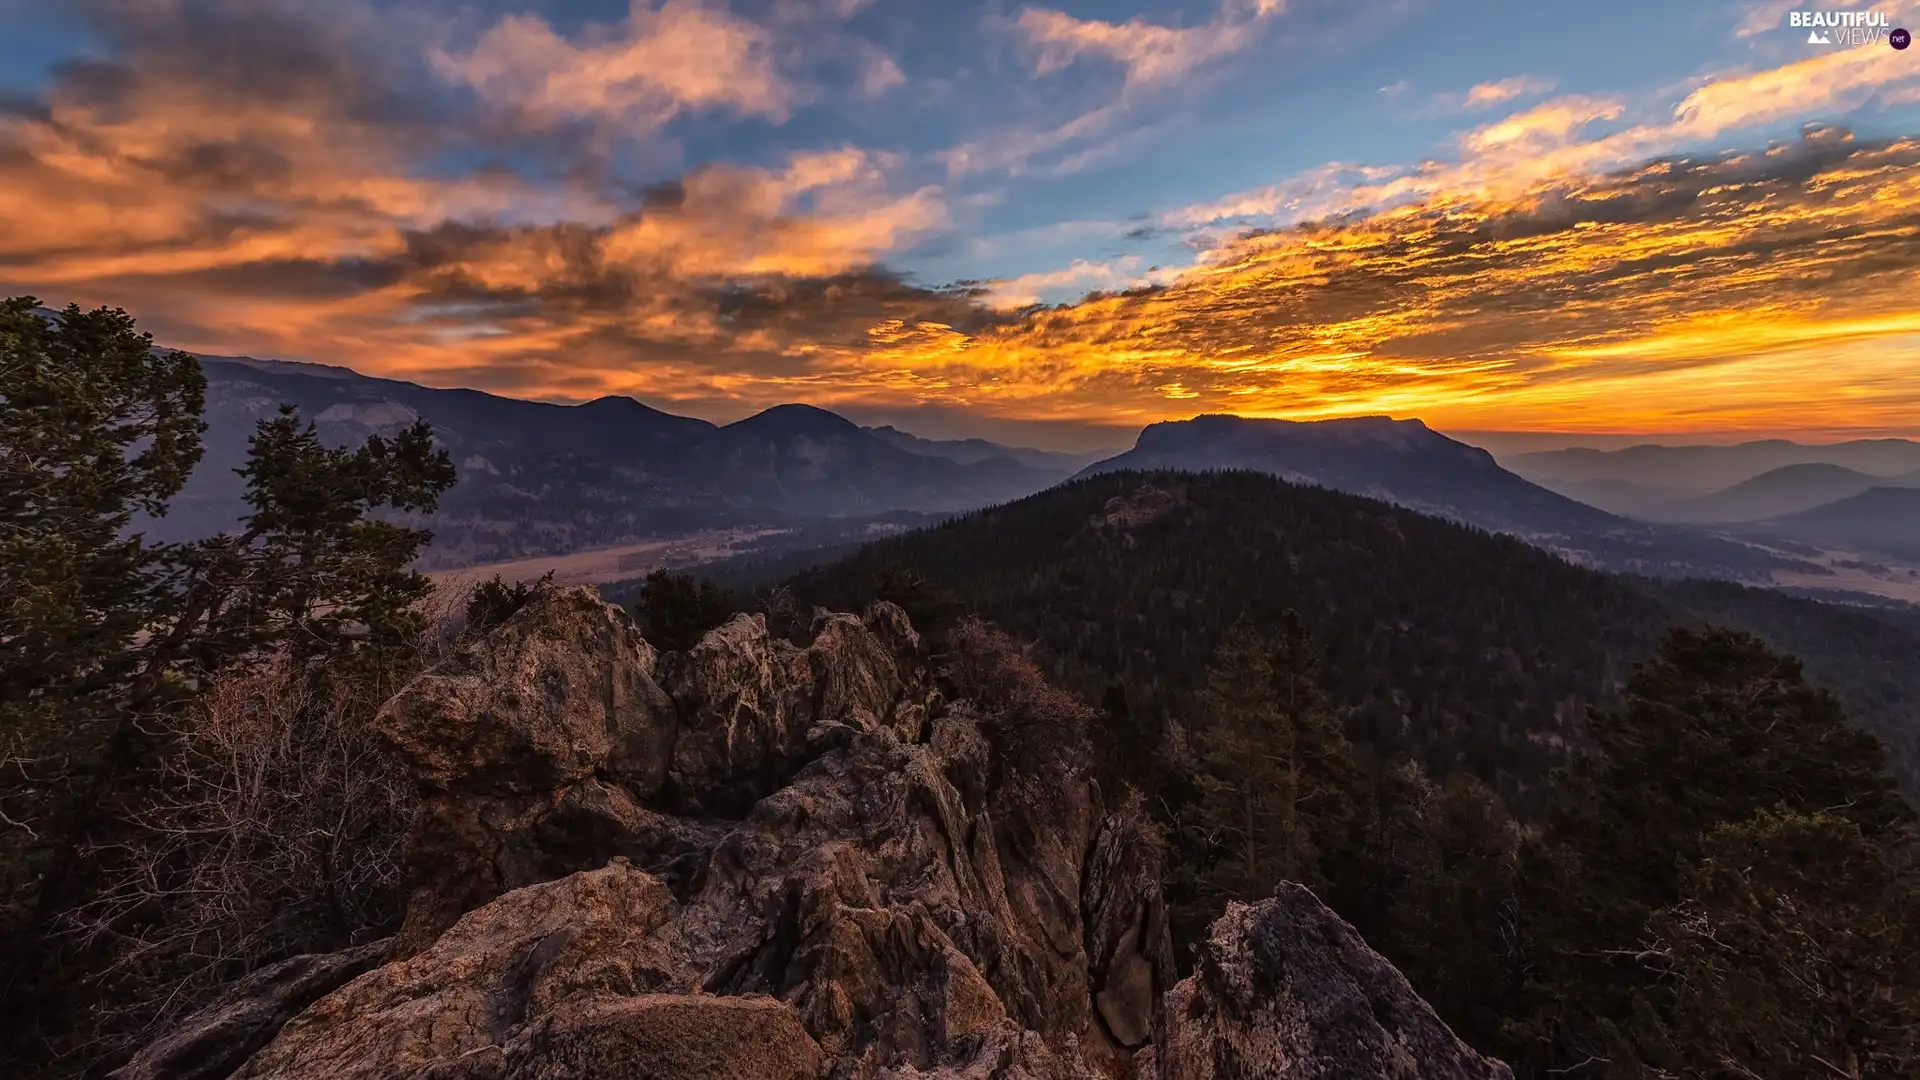 Colorado, The United States, rocky mountains, Rocky Mountain National Park, Sunrise